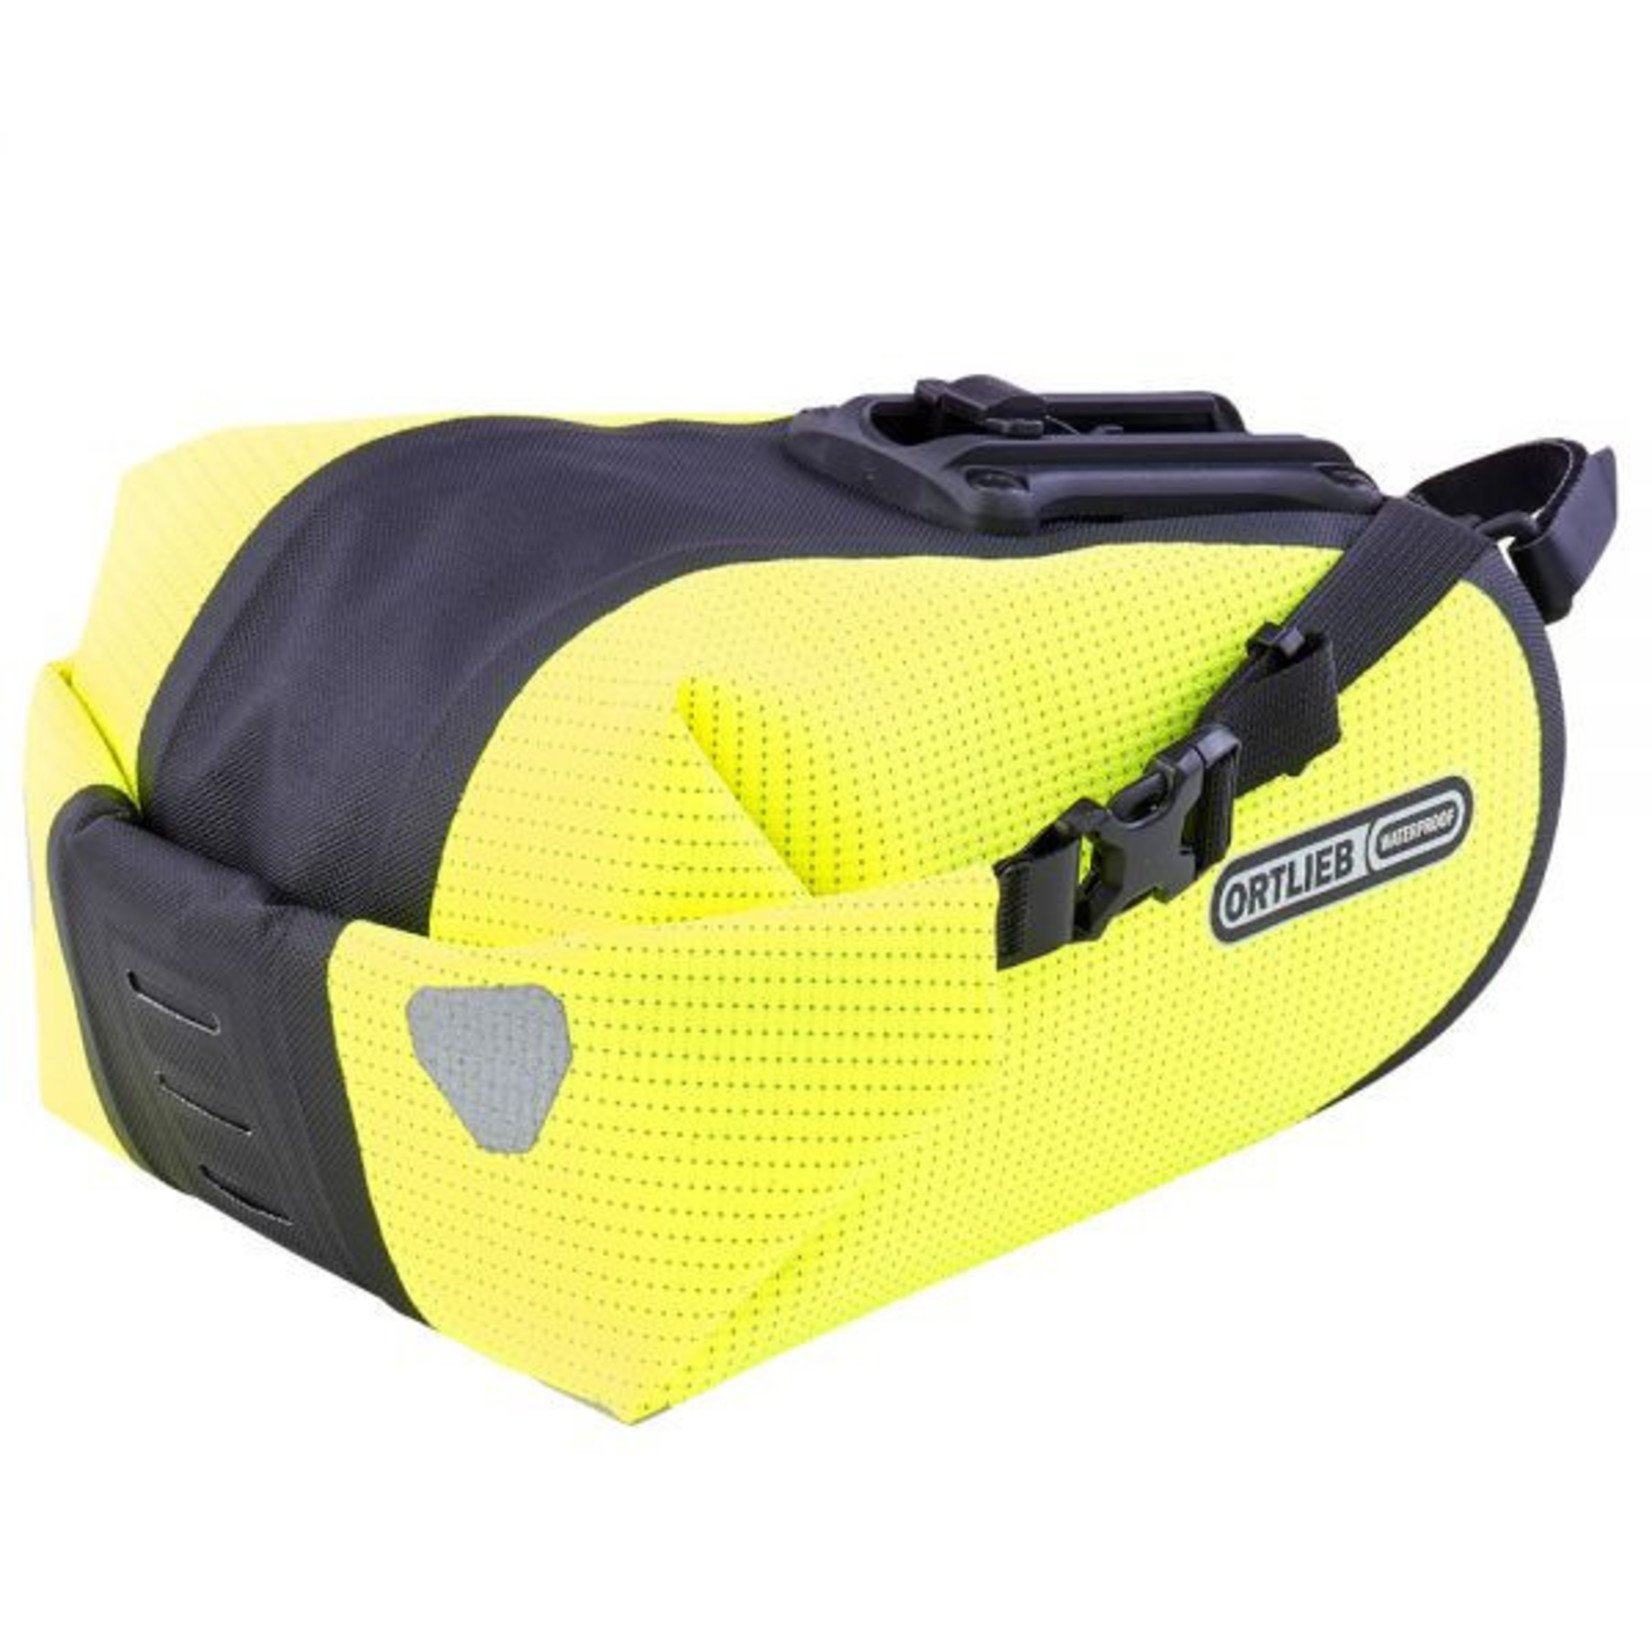 Ortlieb Ortlieb Saddle-Bag Two L High Visibility F9485 - Hi Vis Yellow